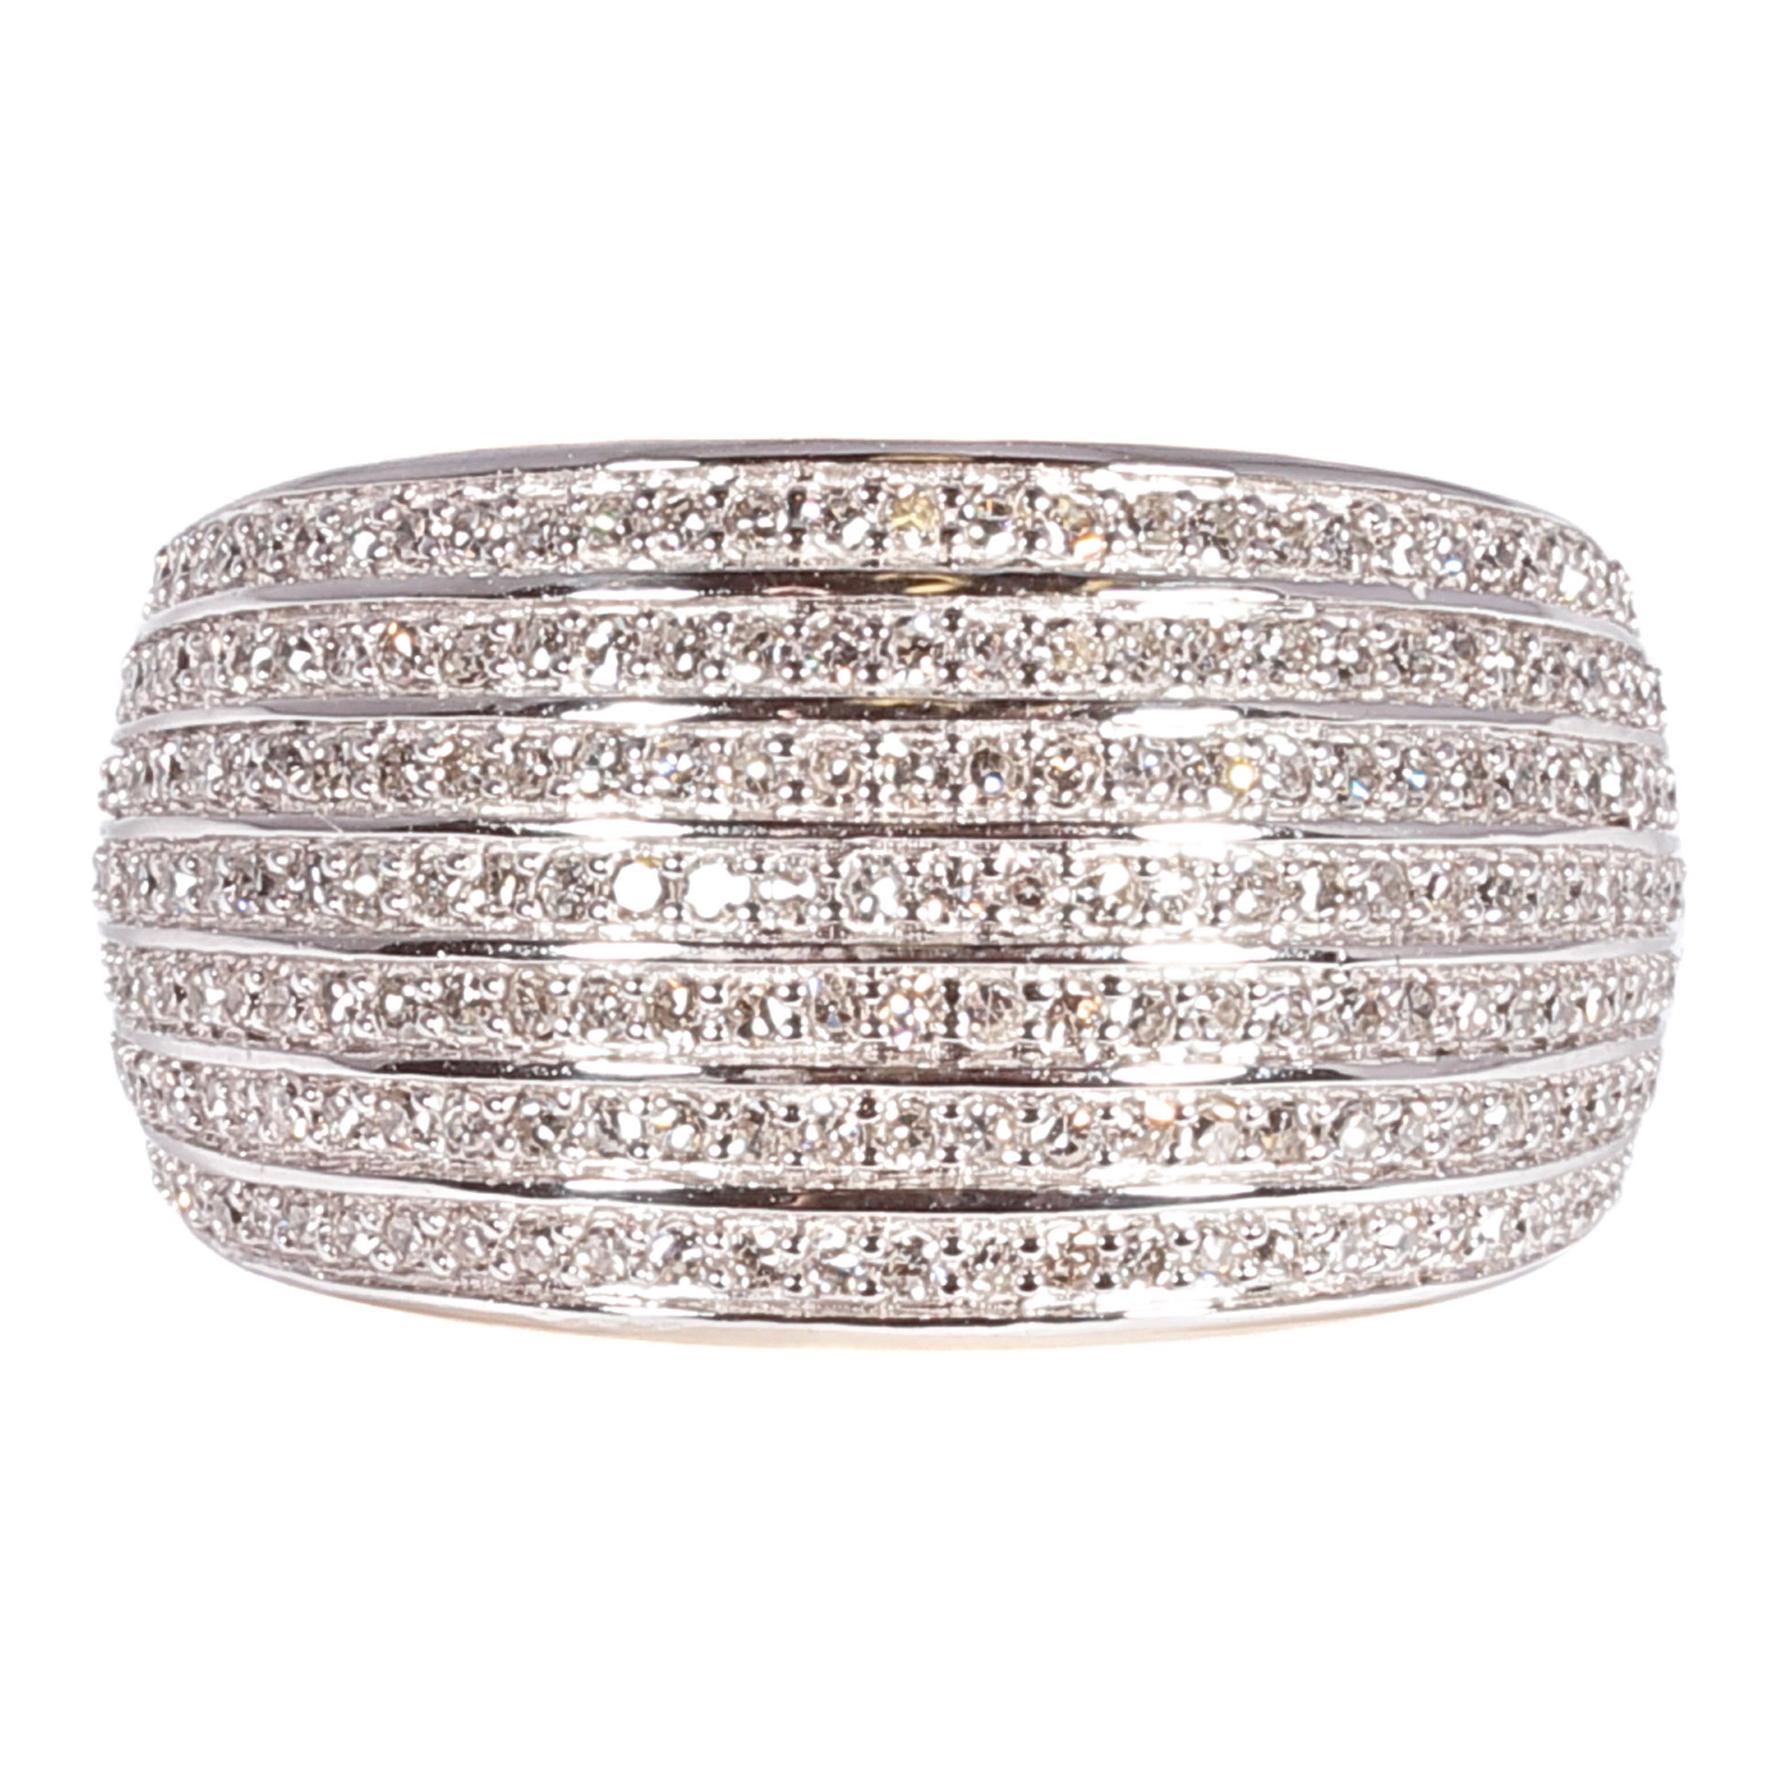 1.40 Carat Diamond White Gold Ring by NDI For Sale